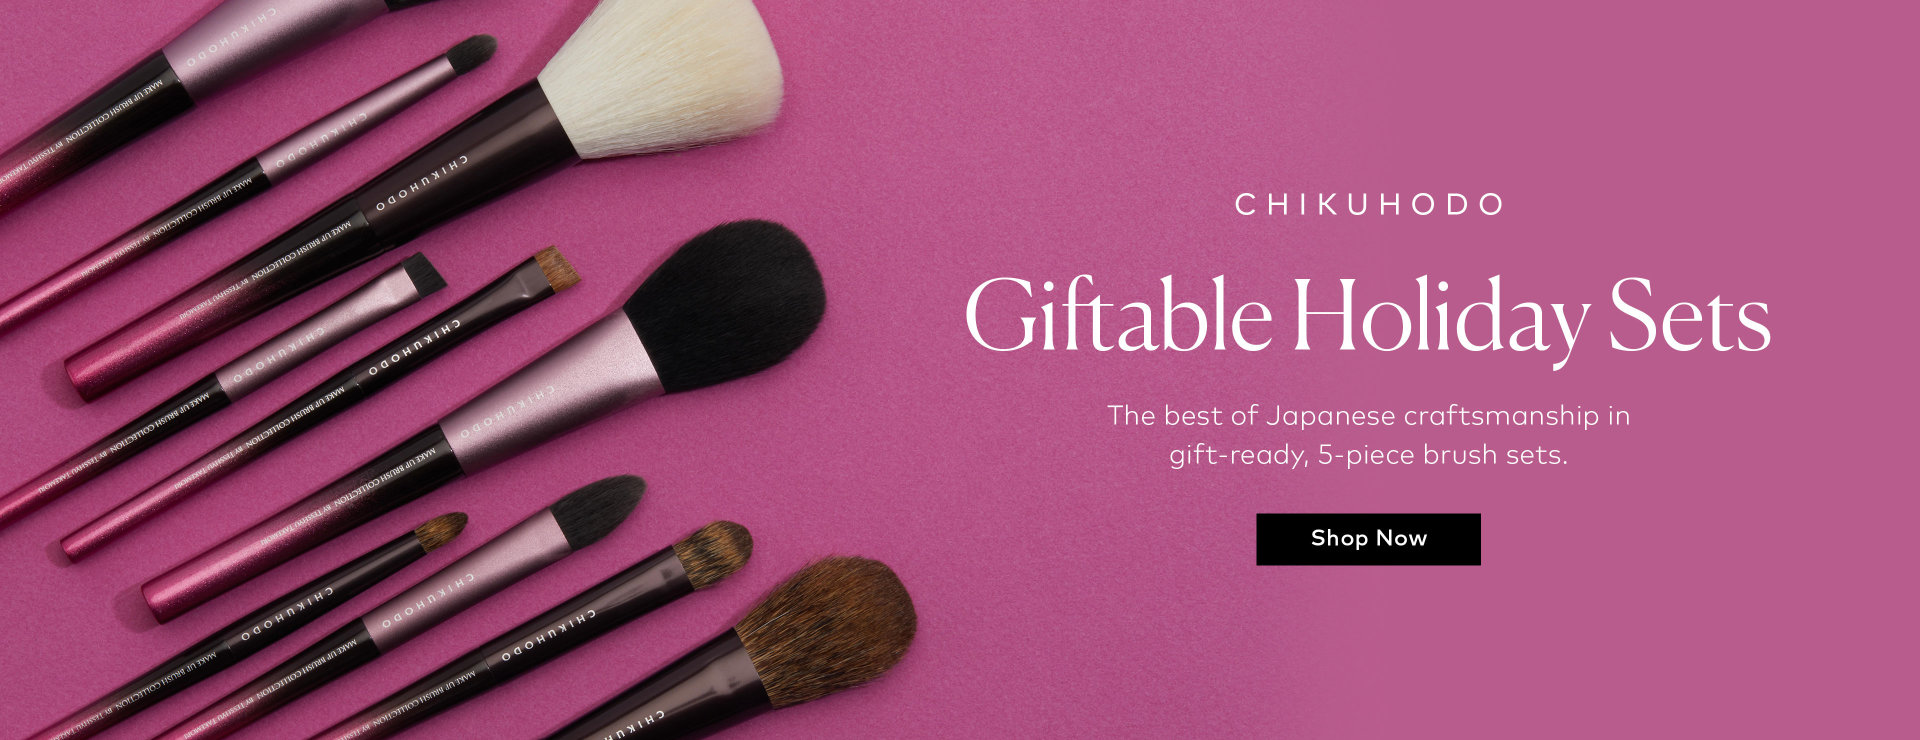 Shop the CHIKUHODO Holiday Sets on Beautylish.com